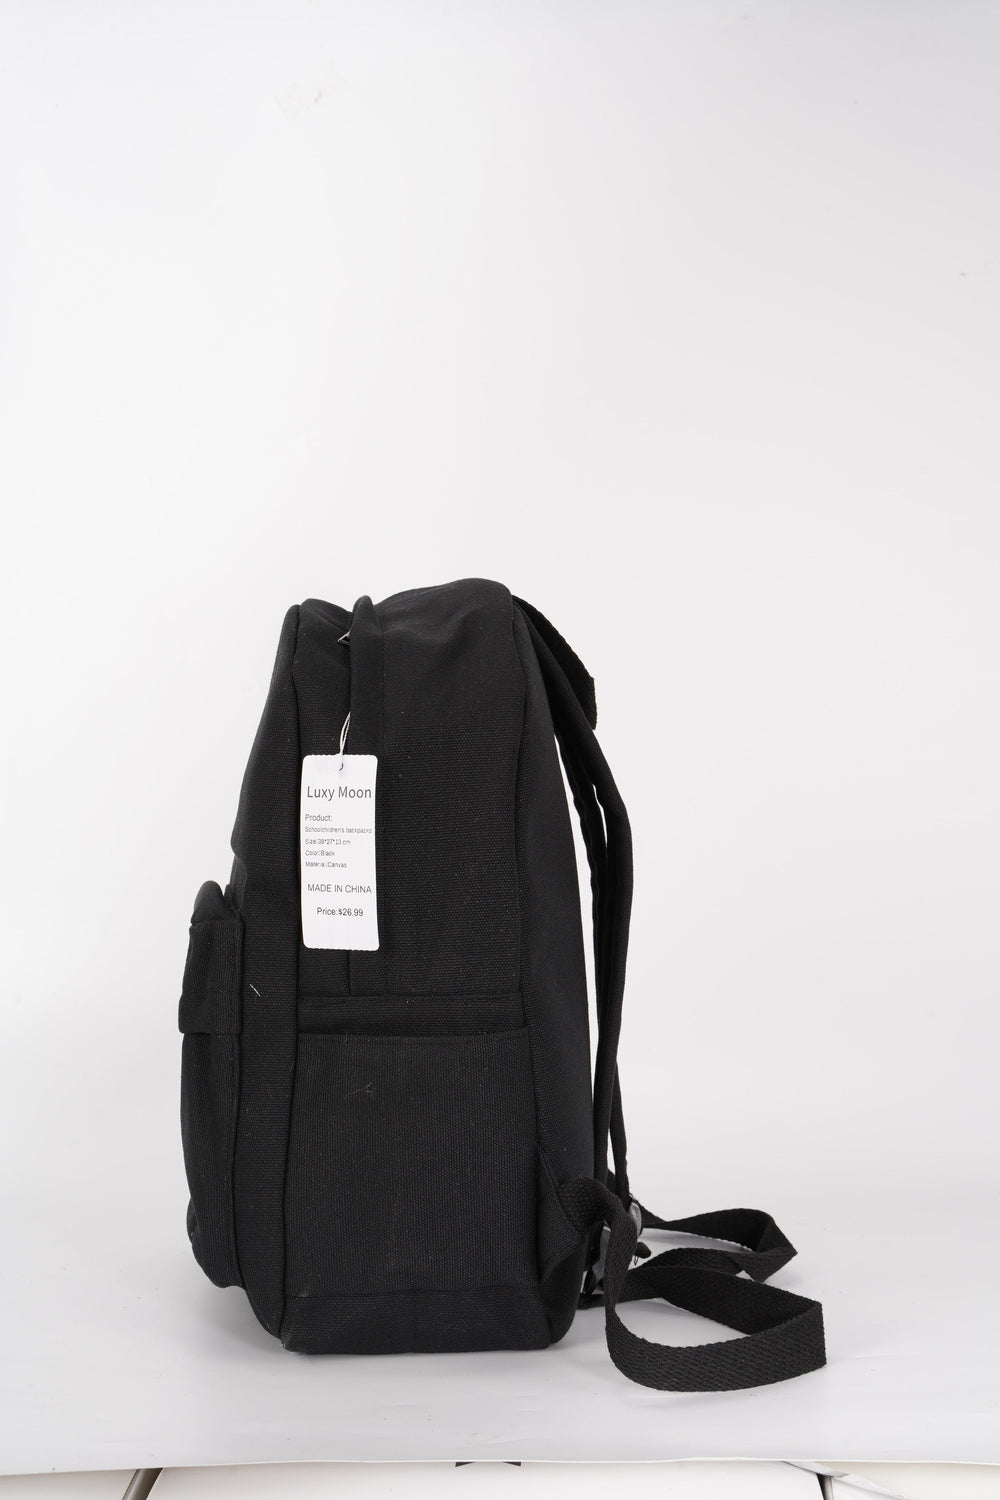 Luxy Moon Schoolchildren's backpacks,School Backpack for Teen Boys Girls,Casual Backpack for School, Lightweight Classics Backpack